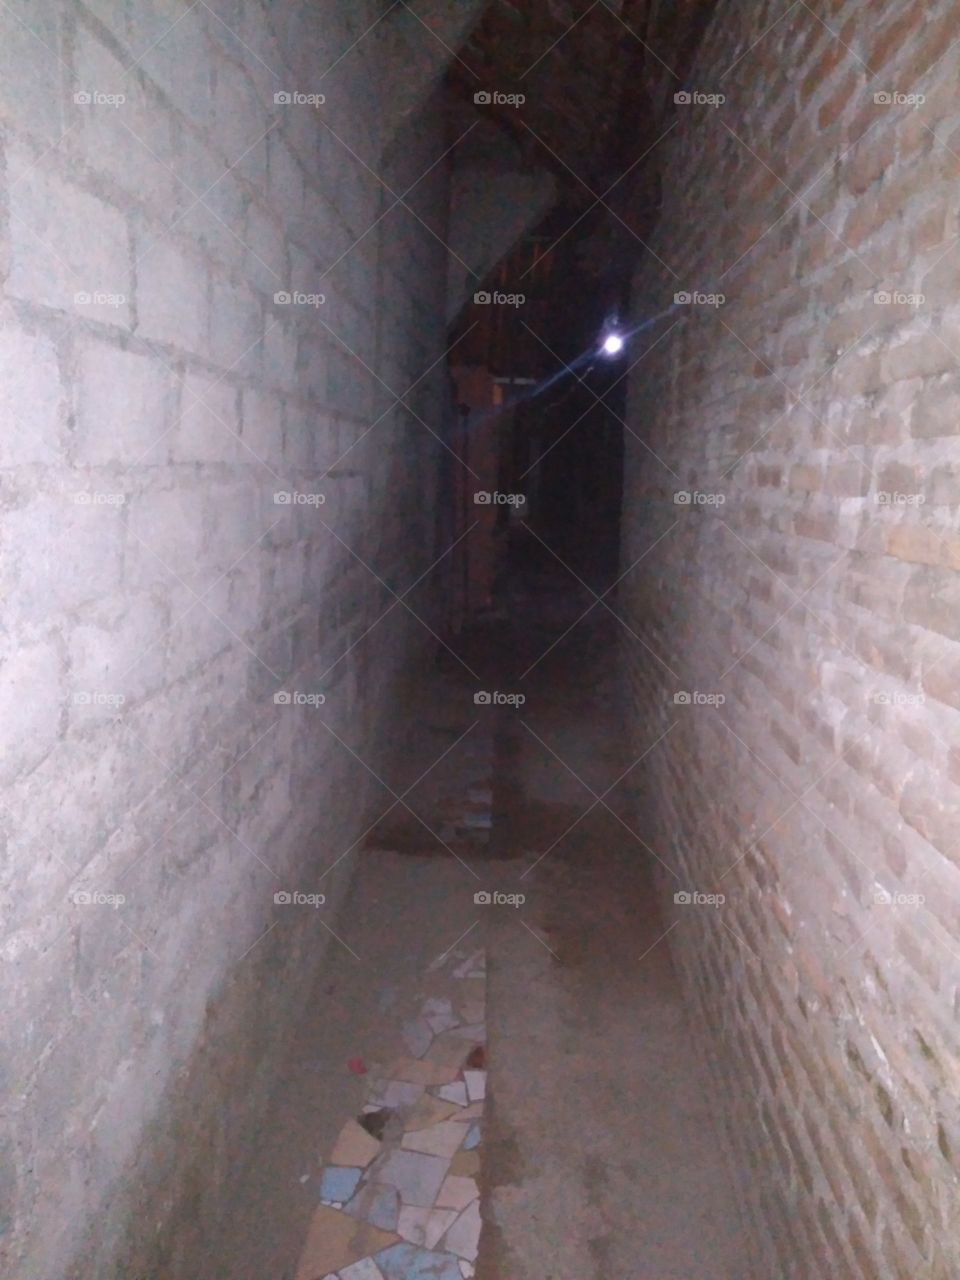 The hallway is narrow